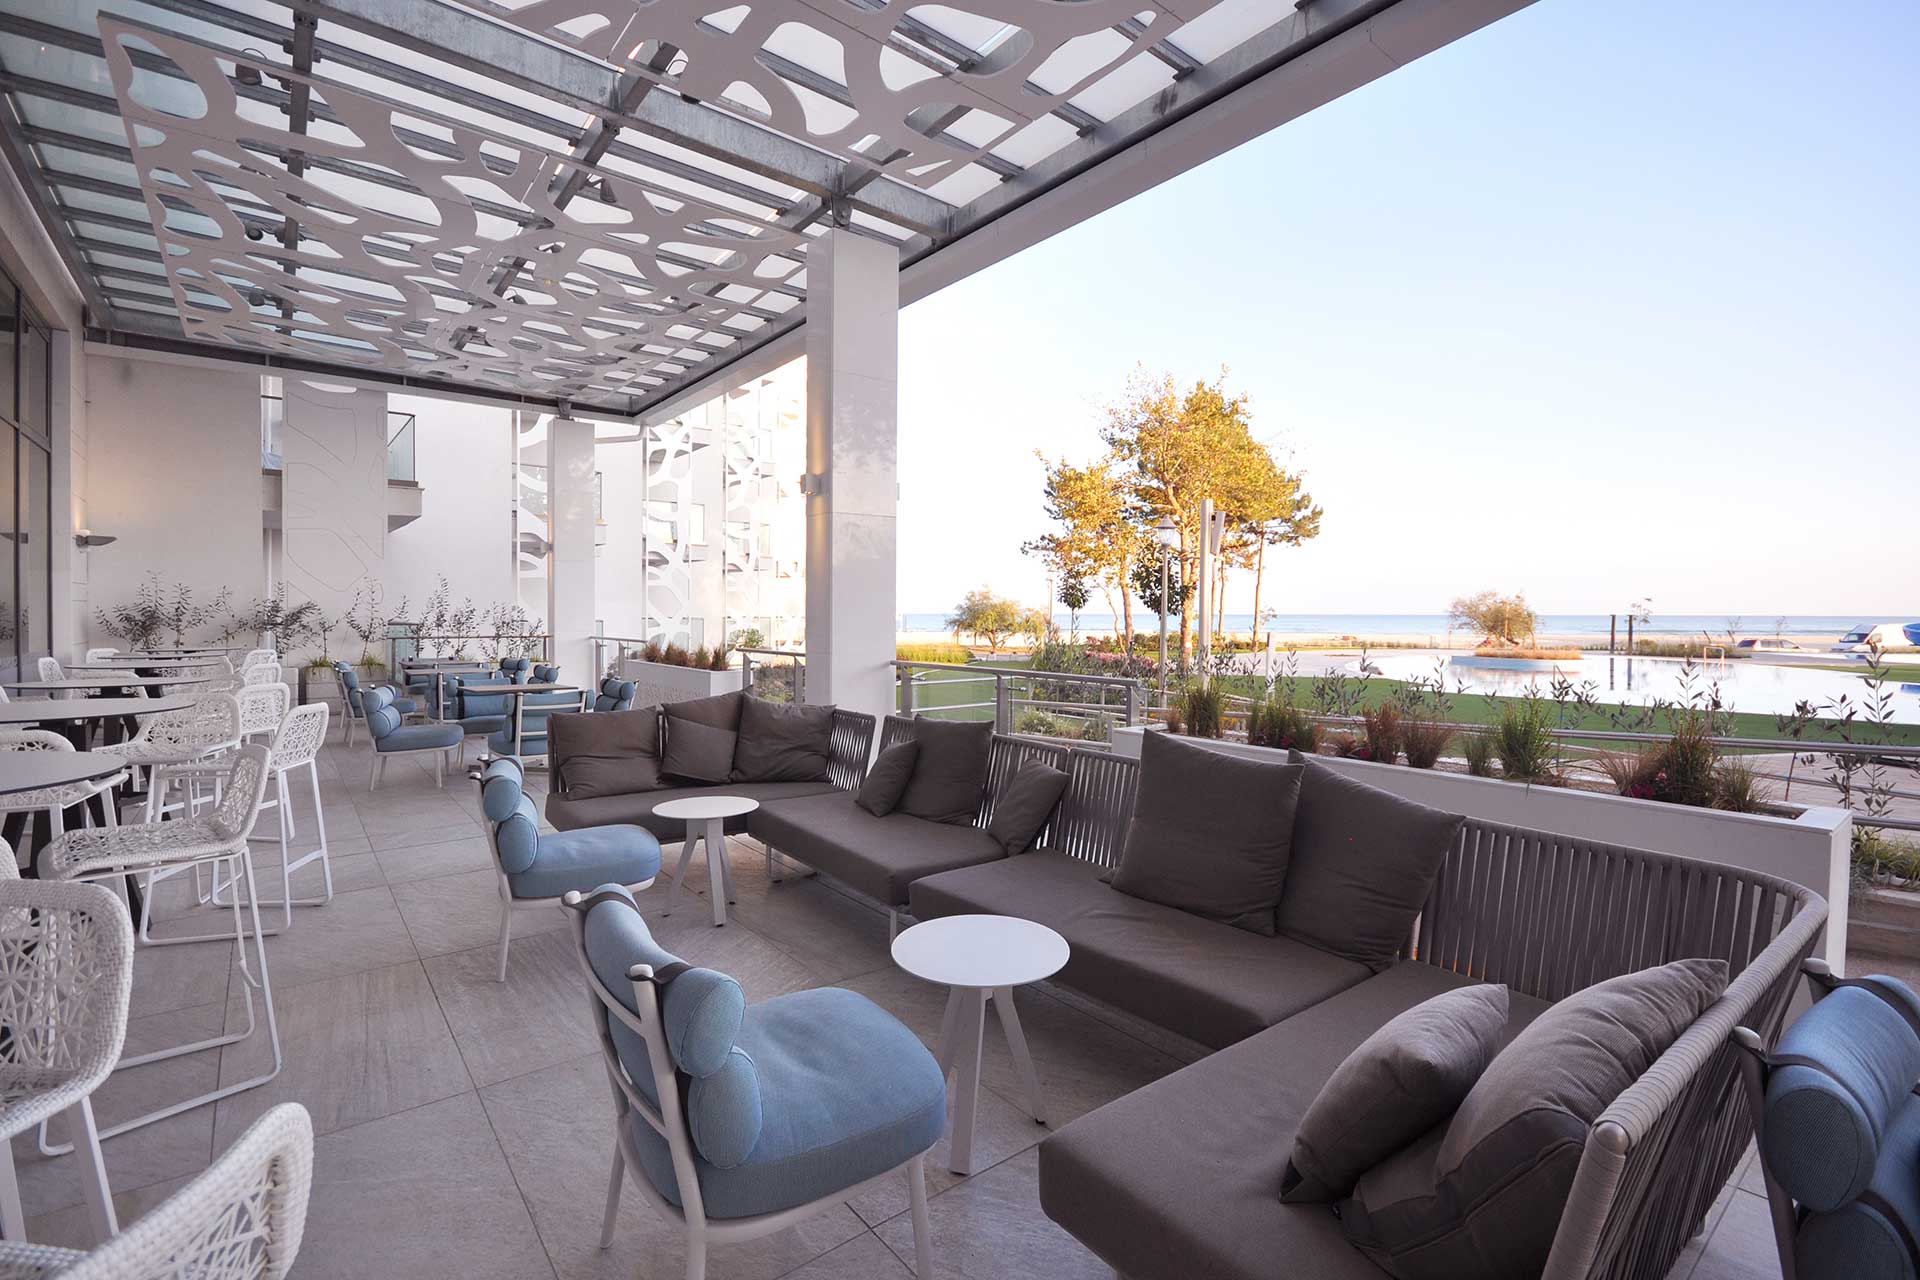 Terrace Paradise Blue Restaurants & Bar by Borella Art Design